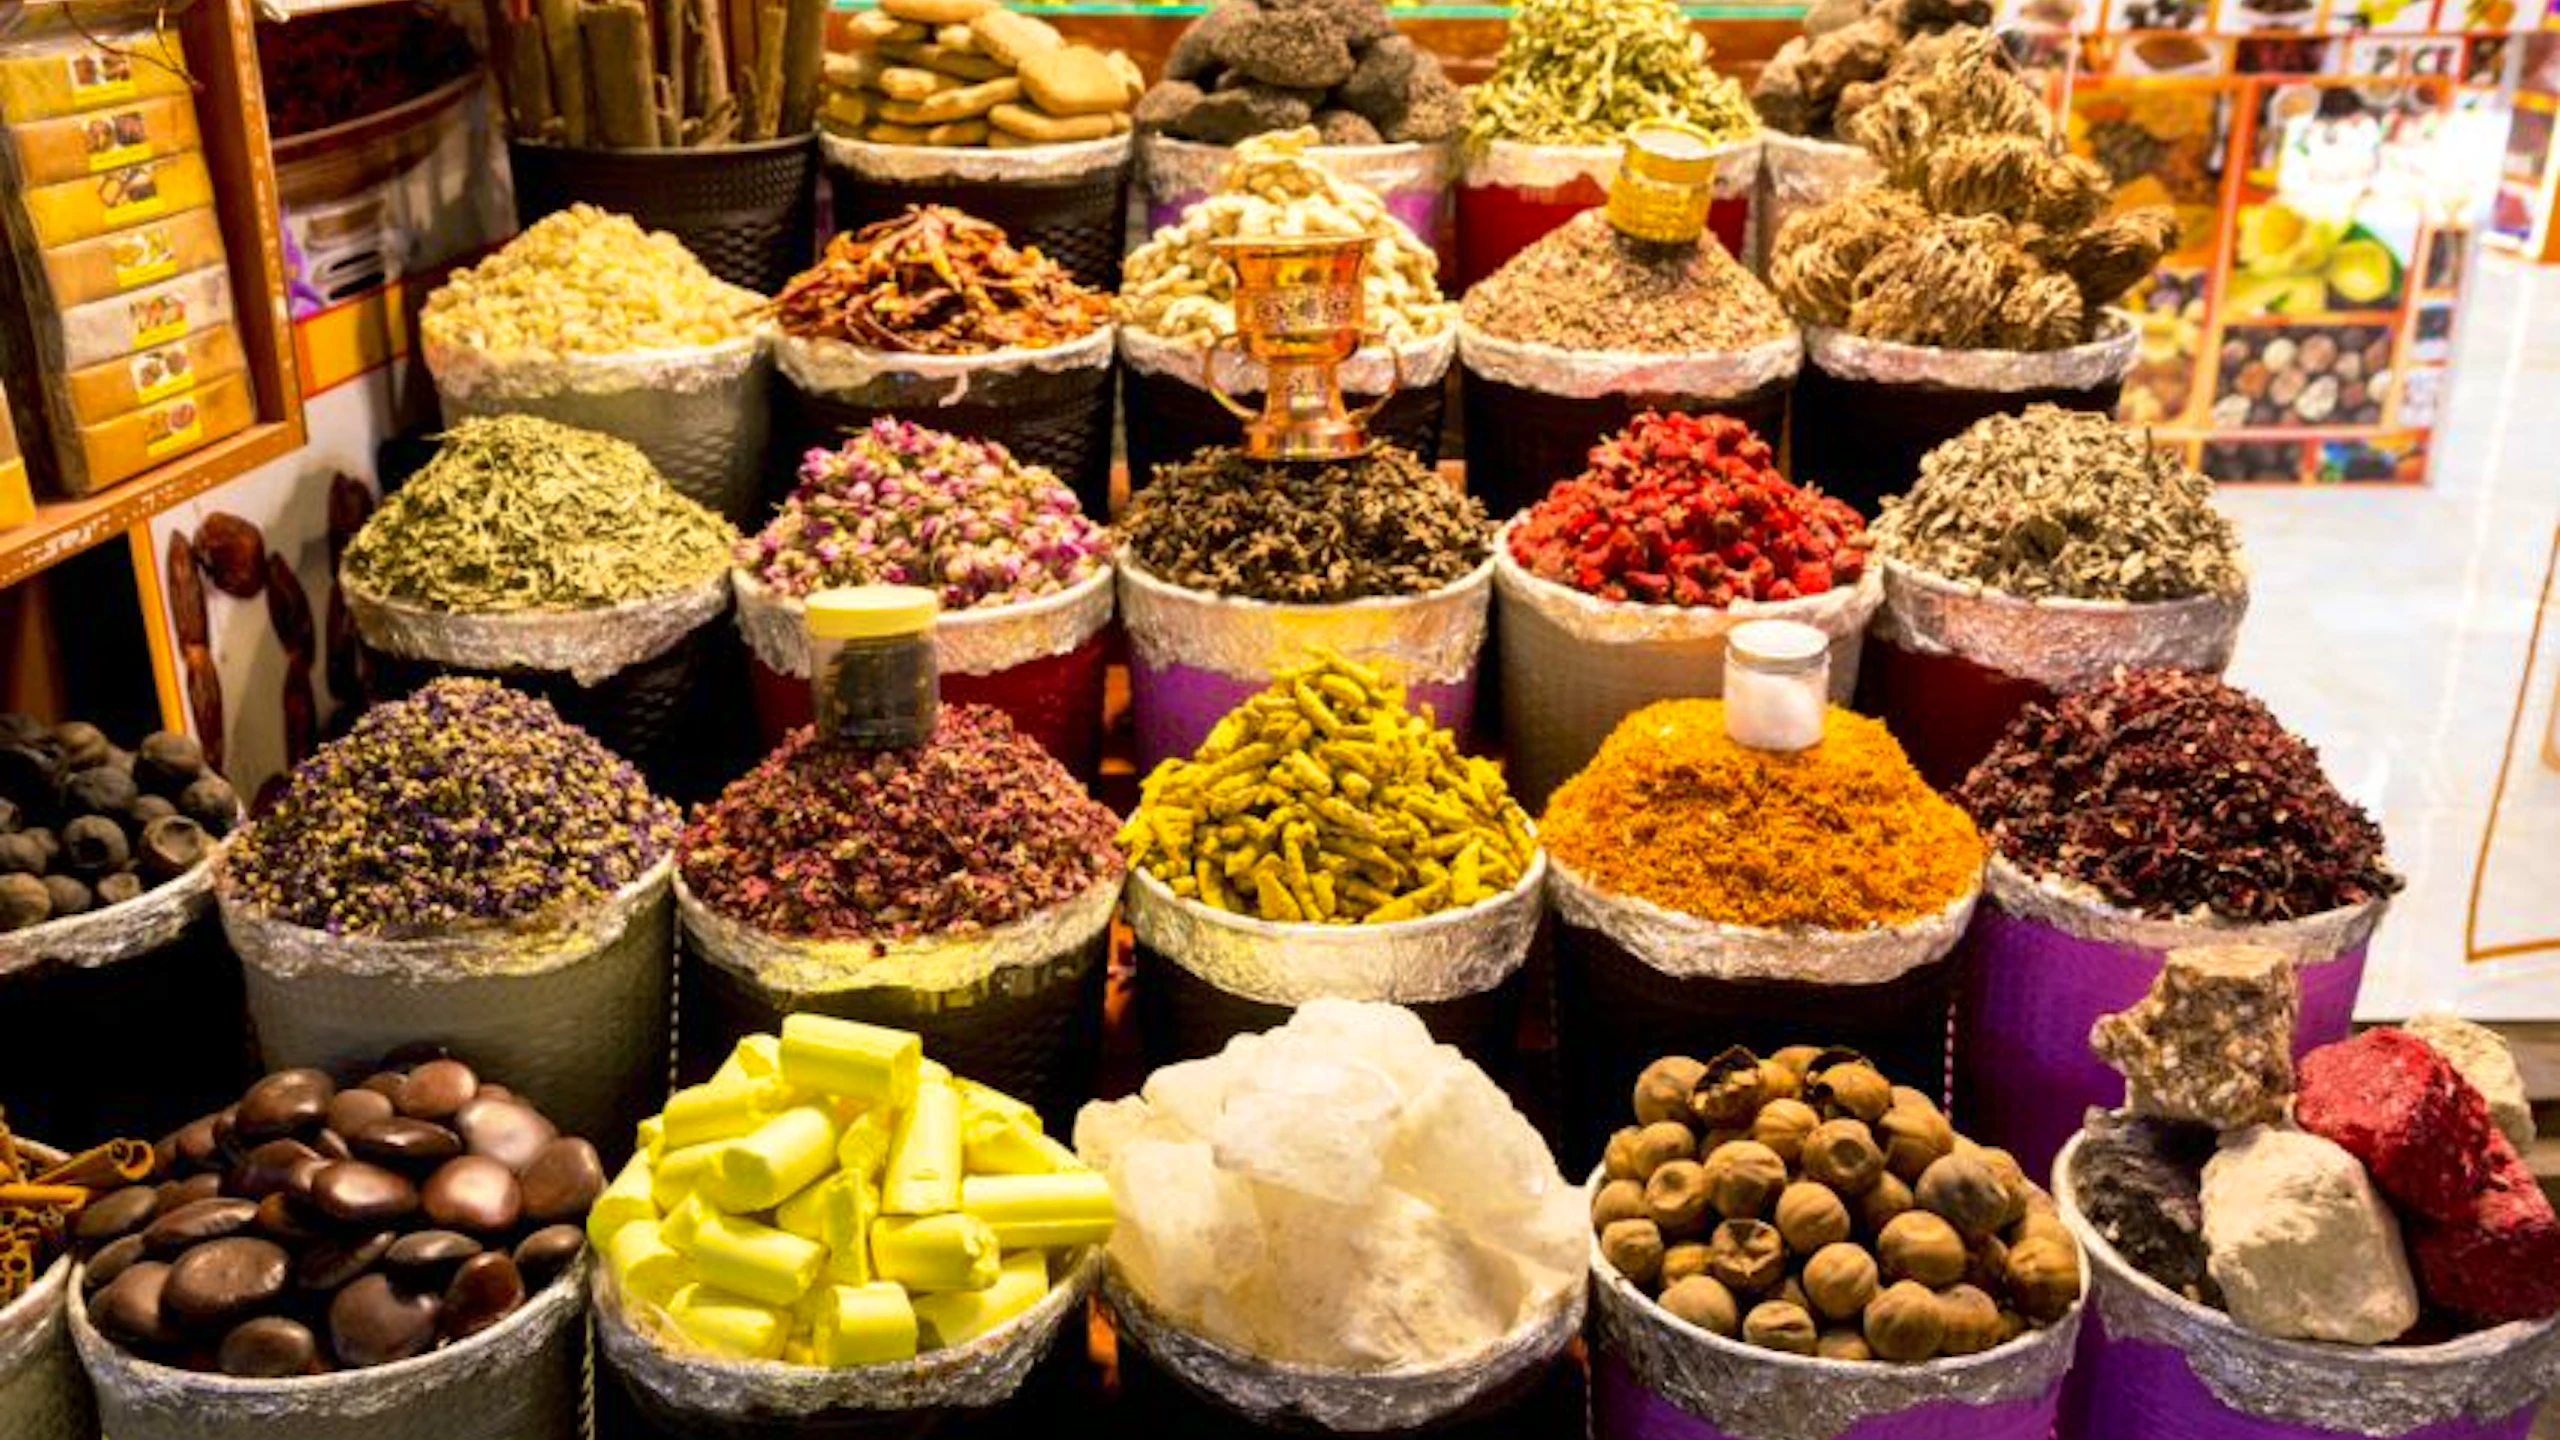 Grand Bazaar and Spice Market Tour Discount